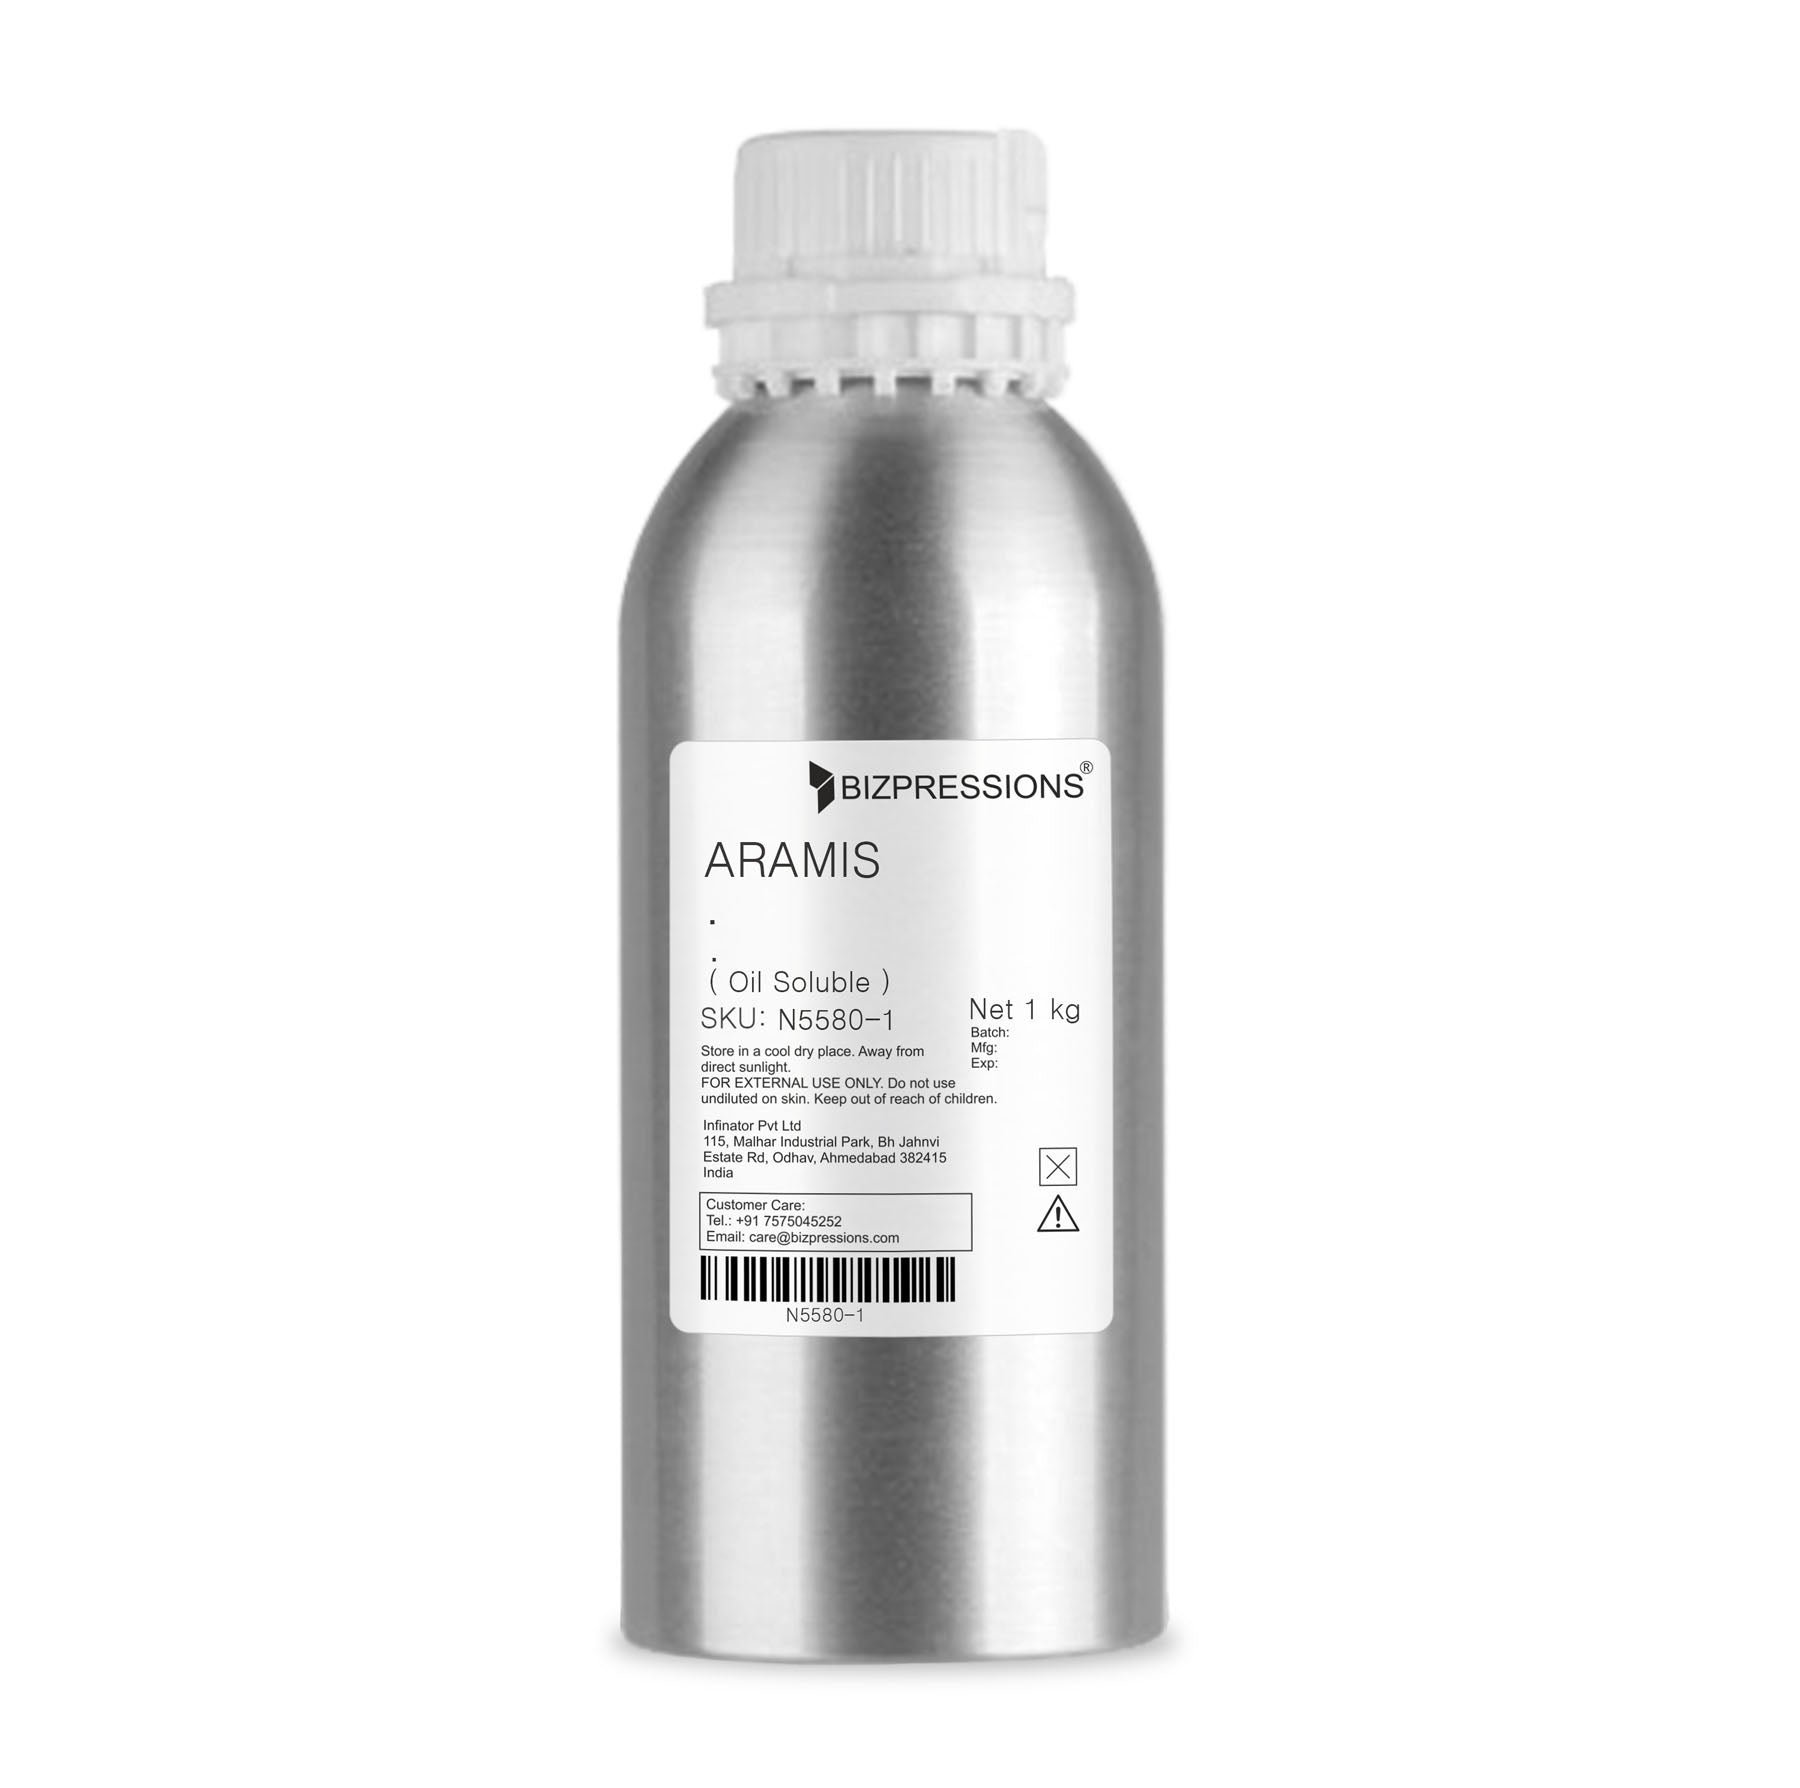 ARAMIS - Fragrance ( Oil Soluble ) - 1 kg